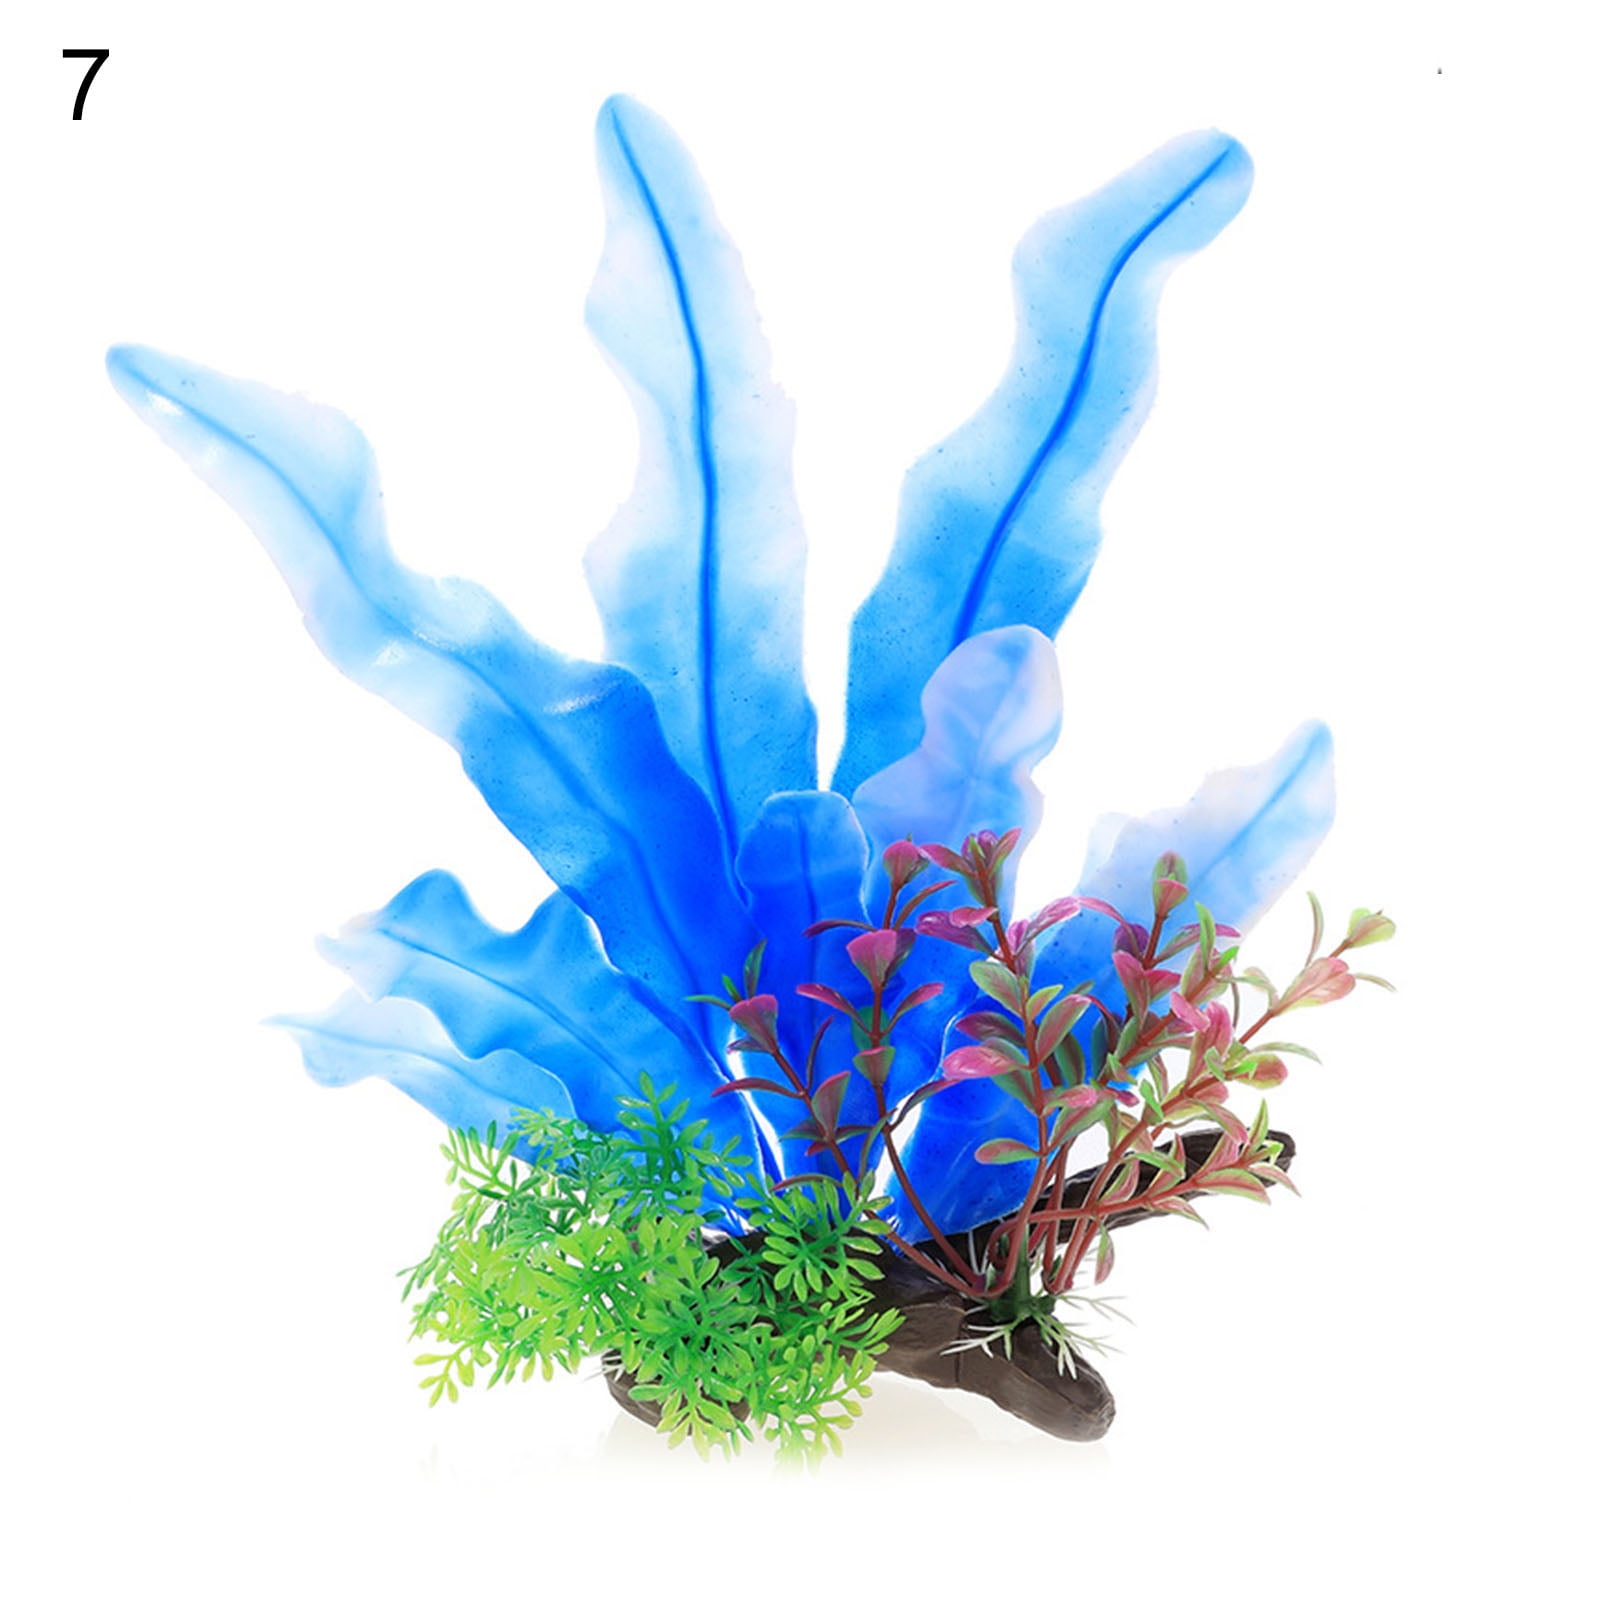 XWQ 22cm Fish Tank Plant Vivid Vibrant Color PVC Fake Seaweed